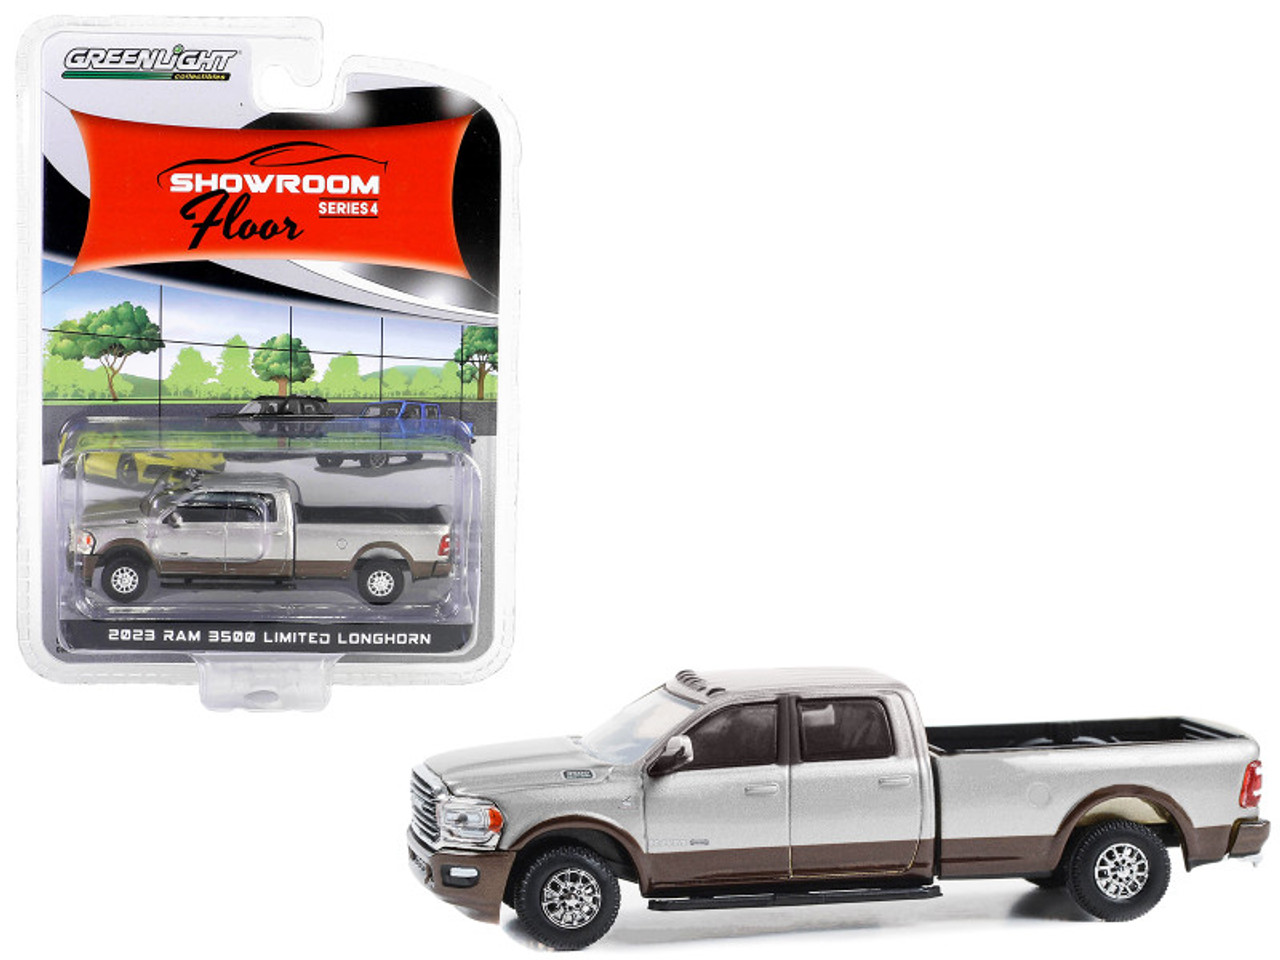 2023 Dodge Ram 3500 Limited Longhorn Pickup Truck Billet Silver Metallic and Walnut Brown Metallic "Showroom Floor" Series 4 1/64 Diecast Model Car by Greenlight